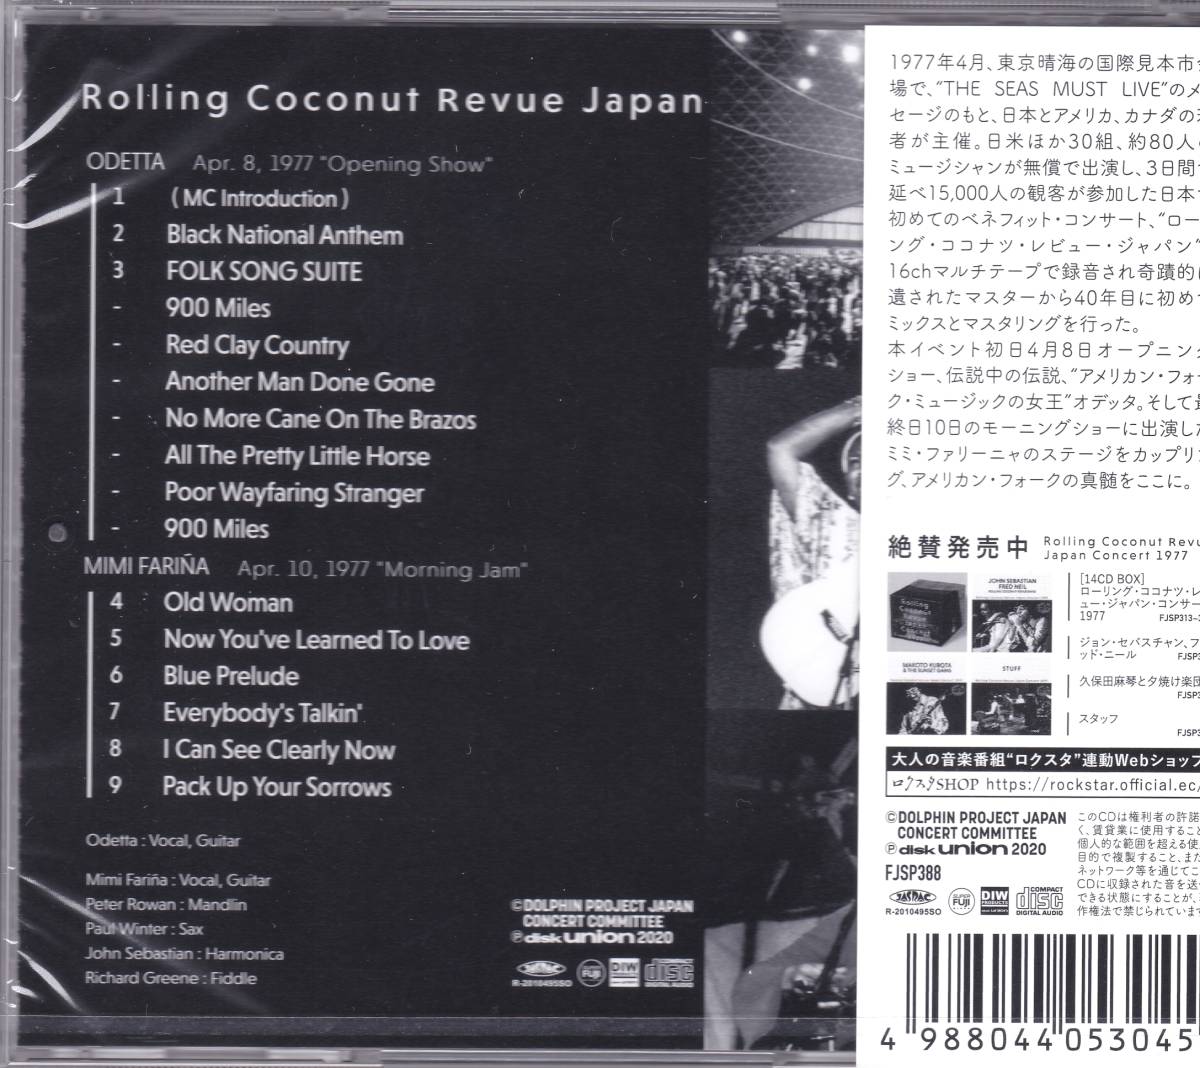 *ODETTA&MIMI FARINA(oteta& ушко (уголок) *fa Lee nya)/Rolling Coconut Revue Japan Concert 1977* супер ценный . жить источник звука. первый источник звука .&CD.*